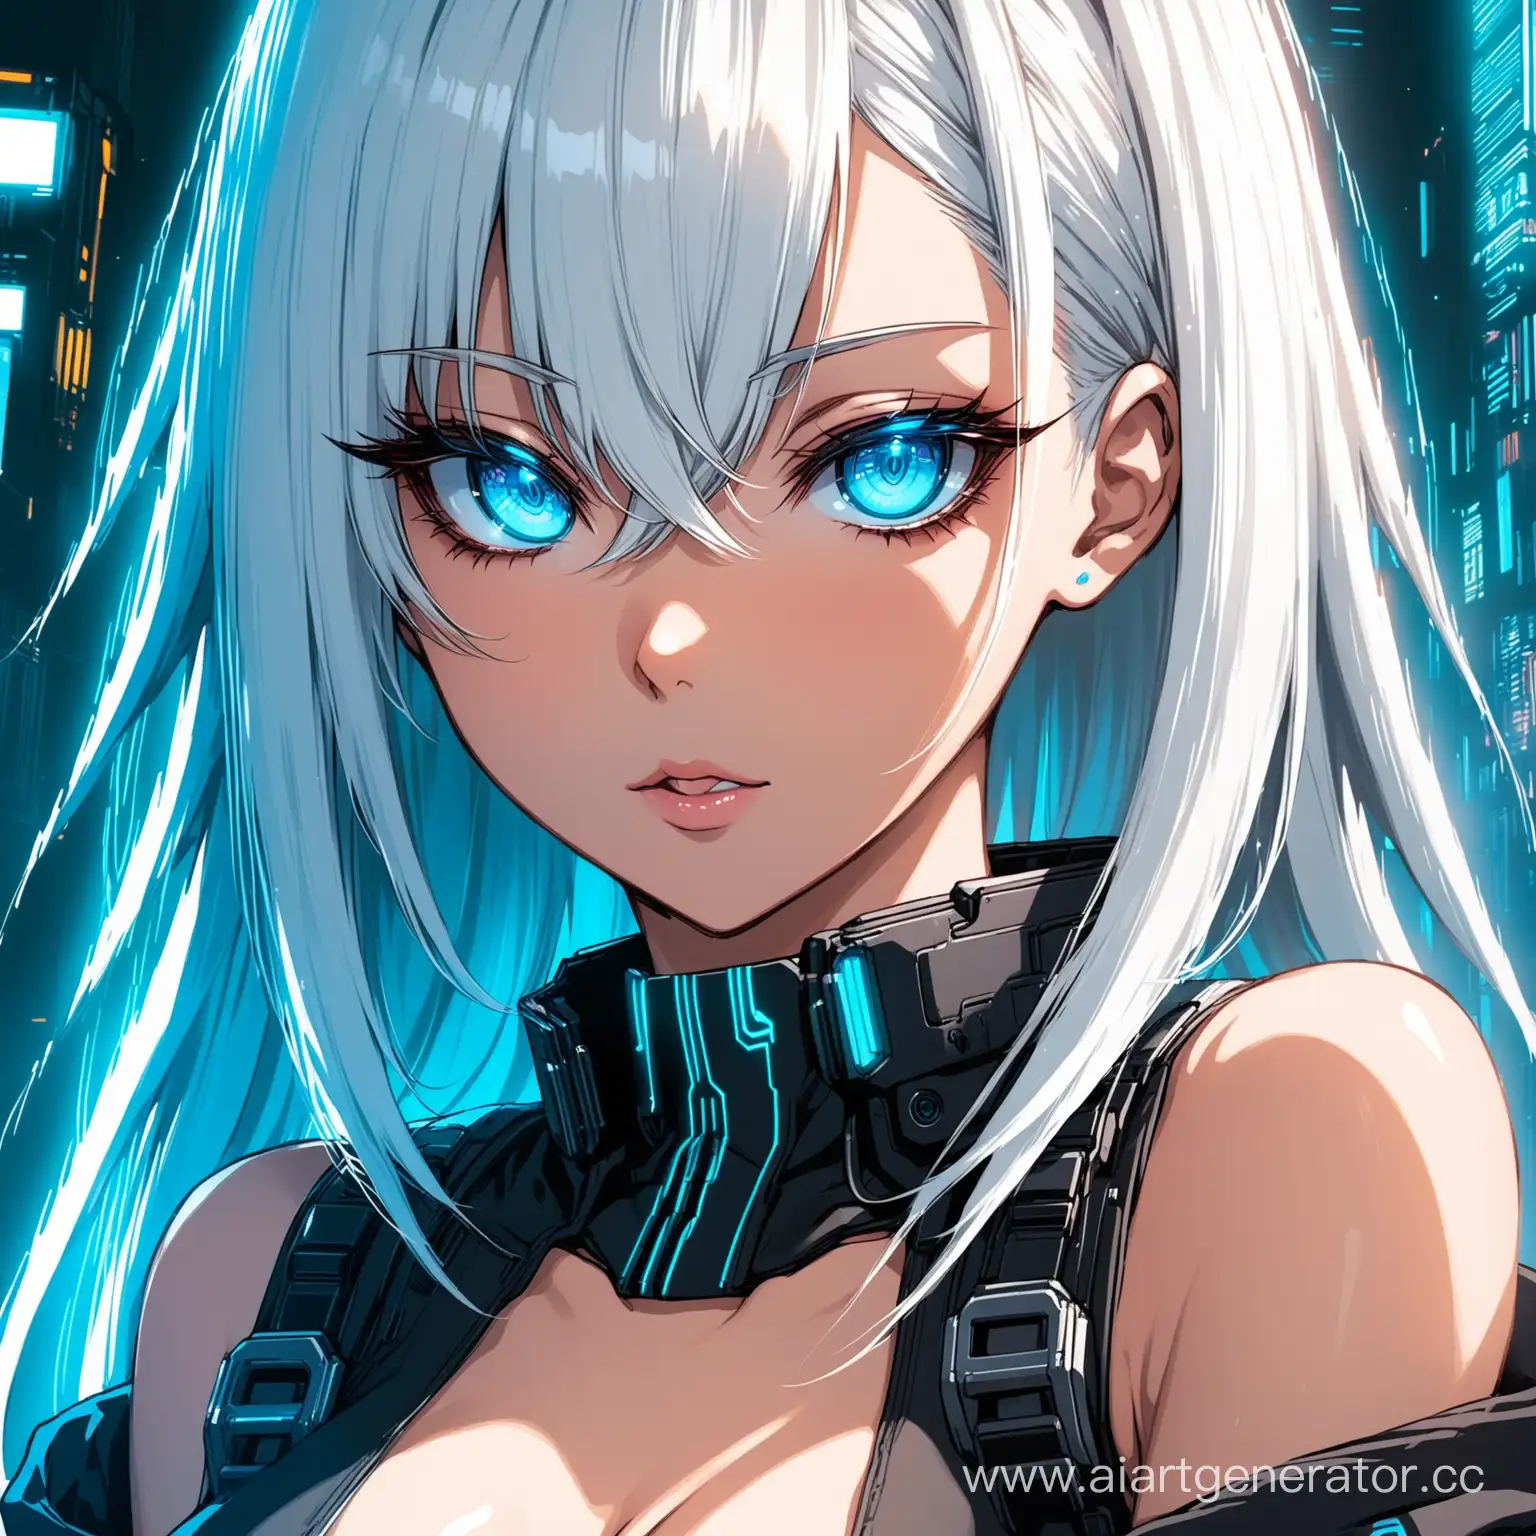 Cyberpunk-Anime-Girl-with-Mesmerizing-Blue-Eyes-and-White-Hair